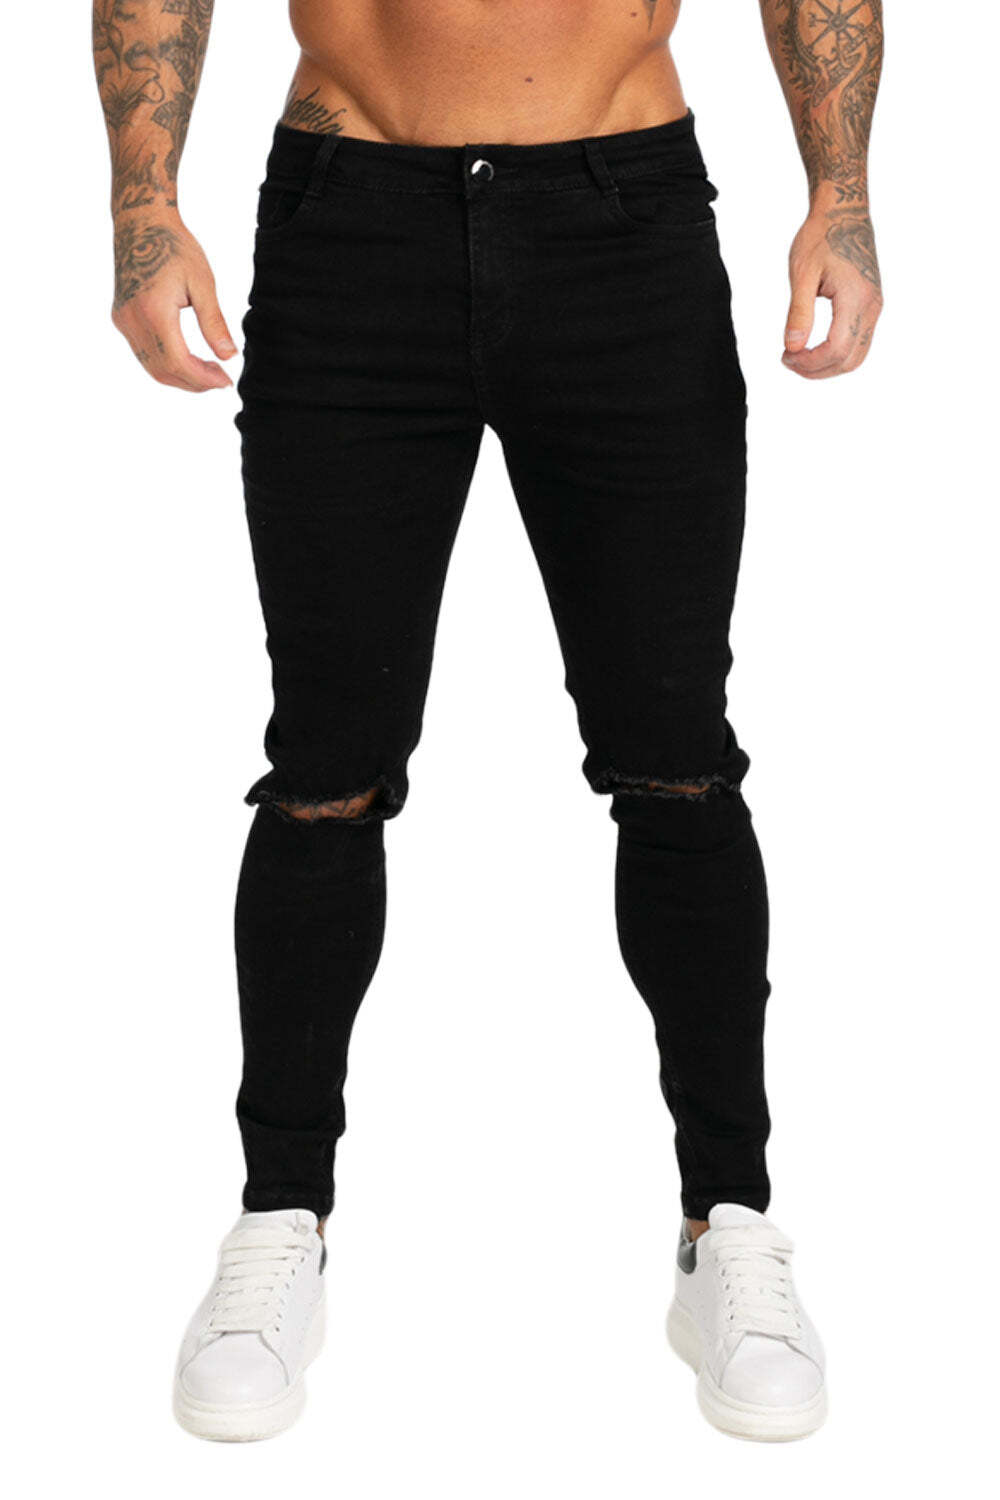 Ripped Custom Bleach Jeans Skinny Jeans-Black - Tuorse